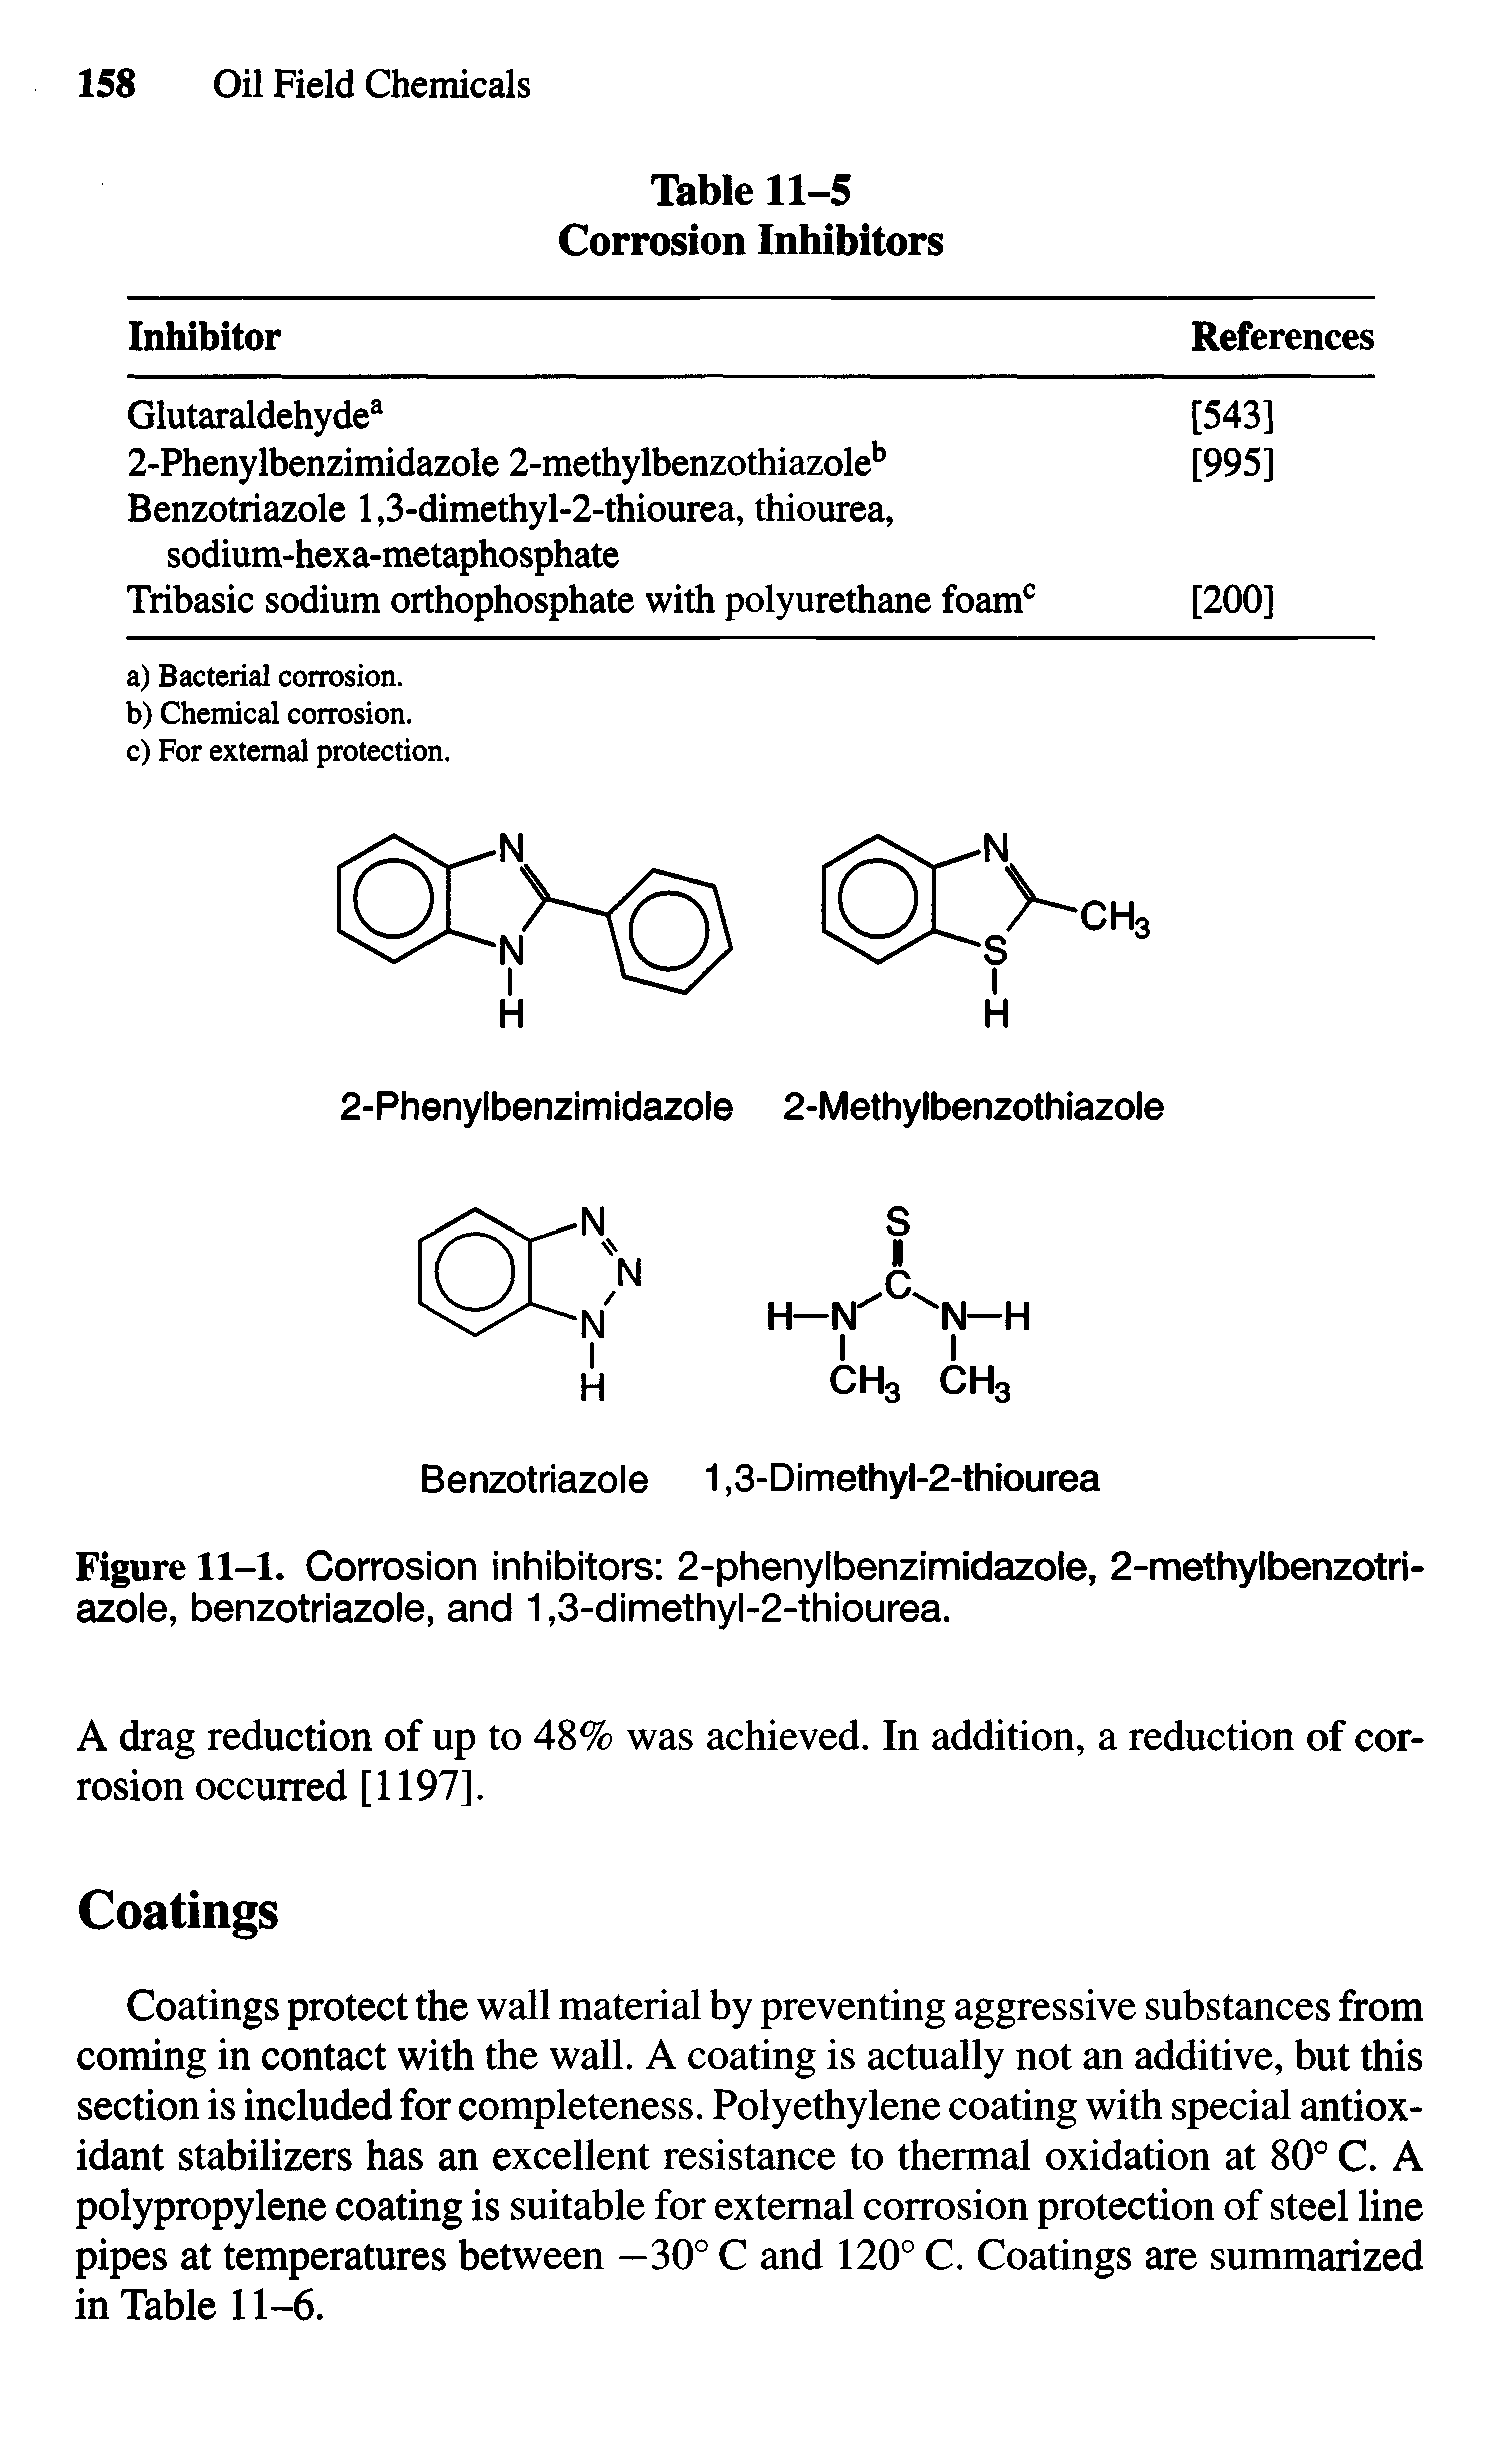 Figure 11-1. Corrosion inhibitors 2-phenylbenzimidazole, 2-methylbenzotri-azole, benzotriazole, and 1,3-dimethyi-2-thiourea.